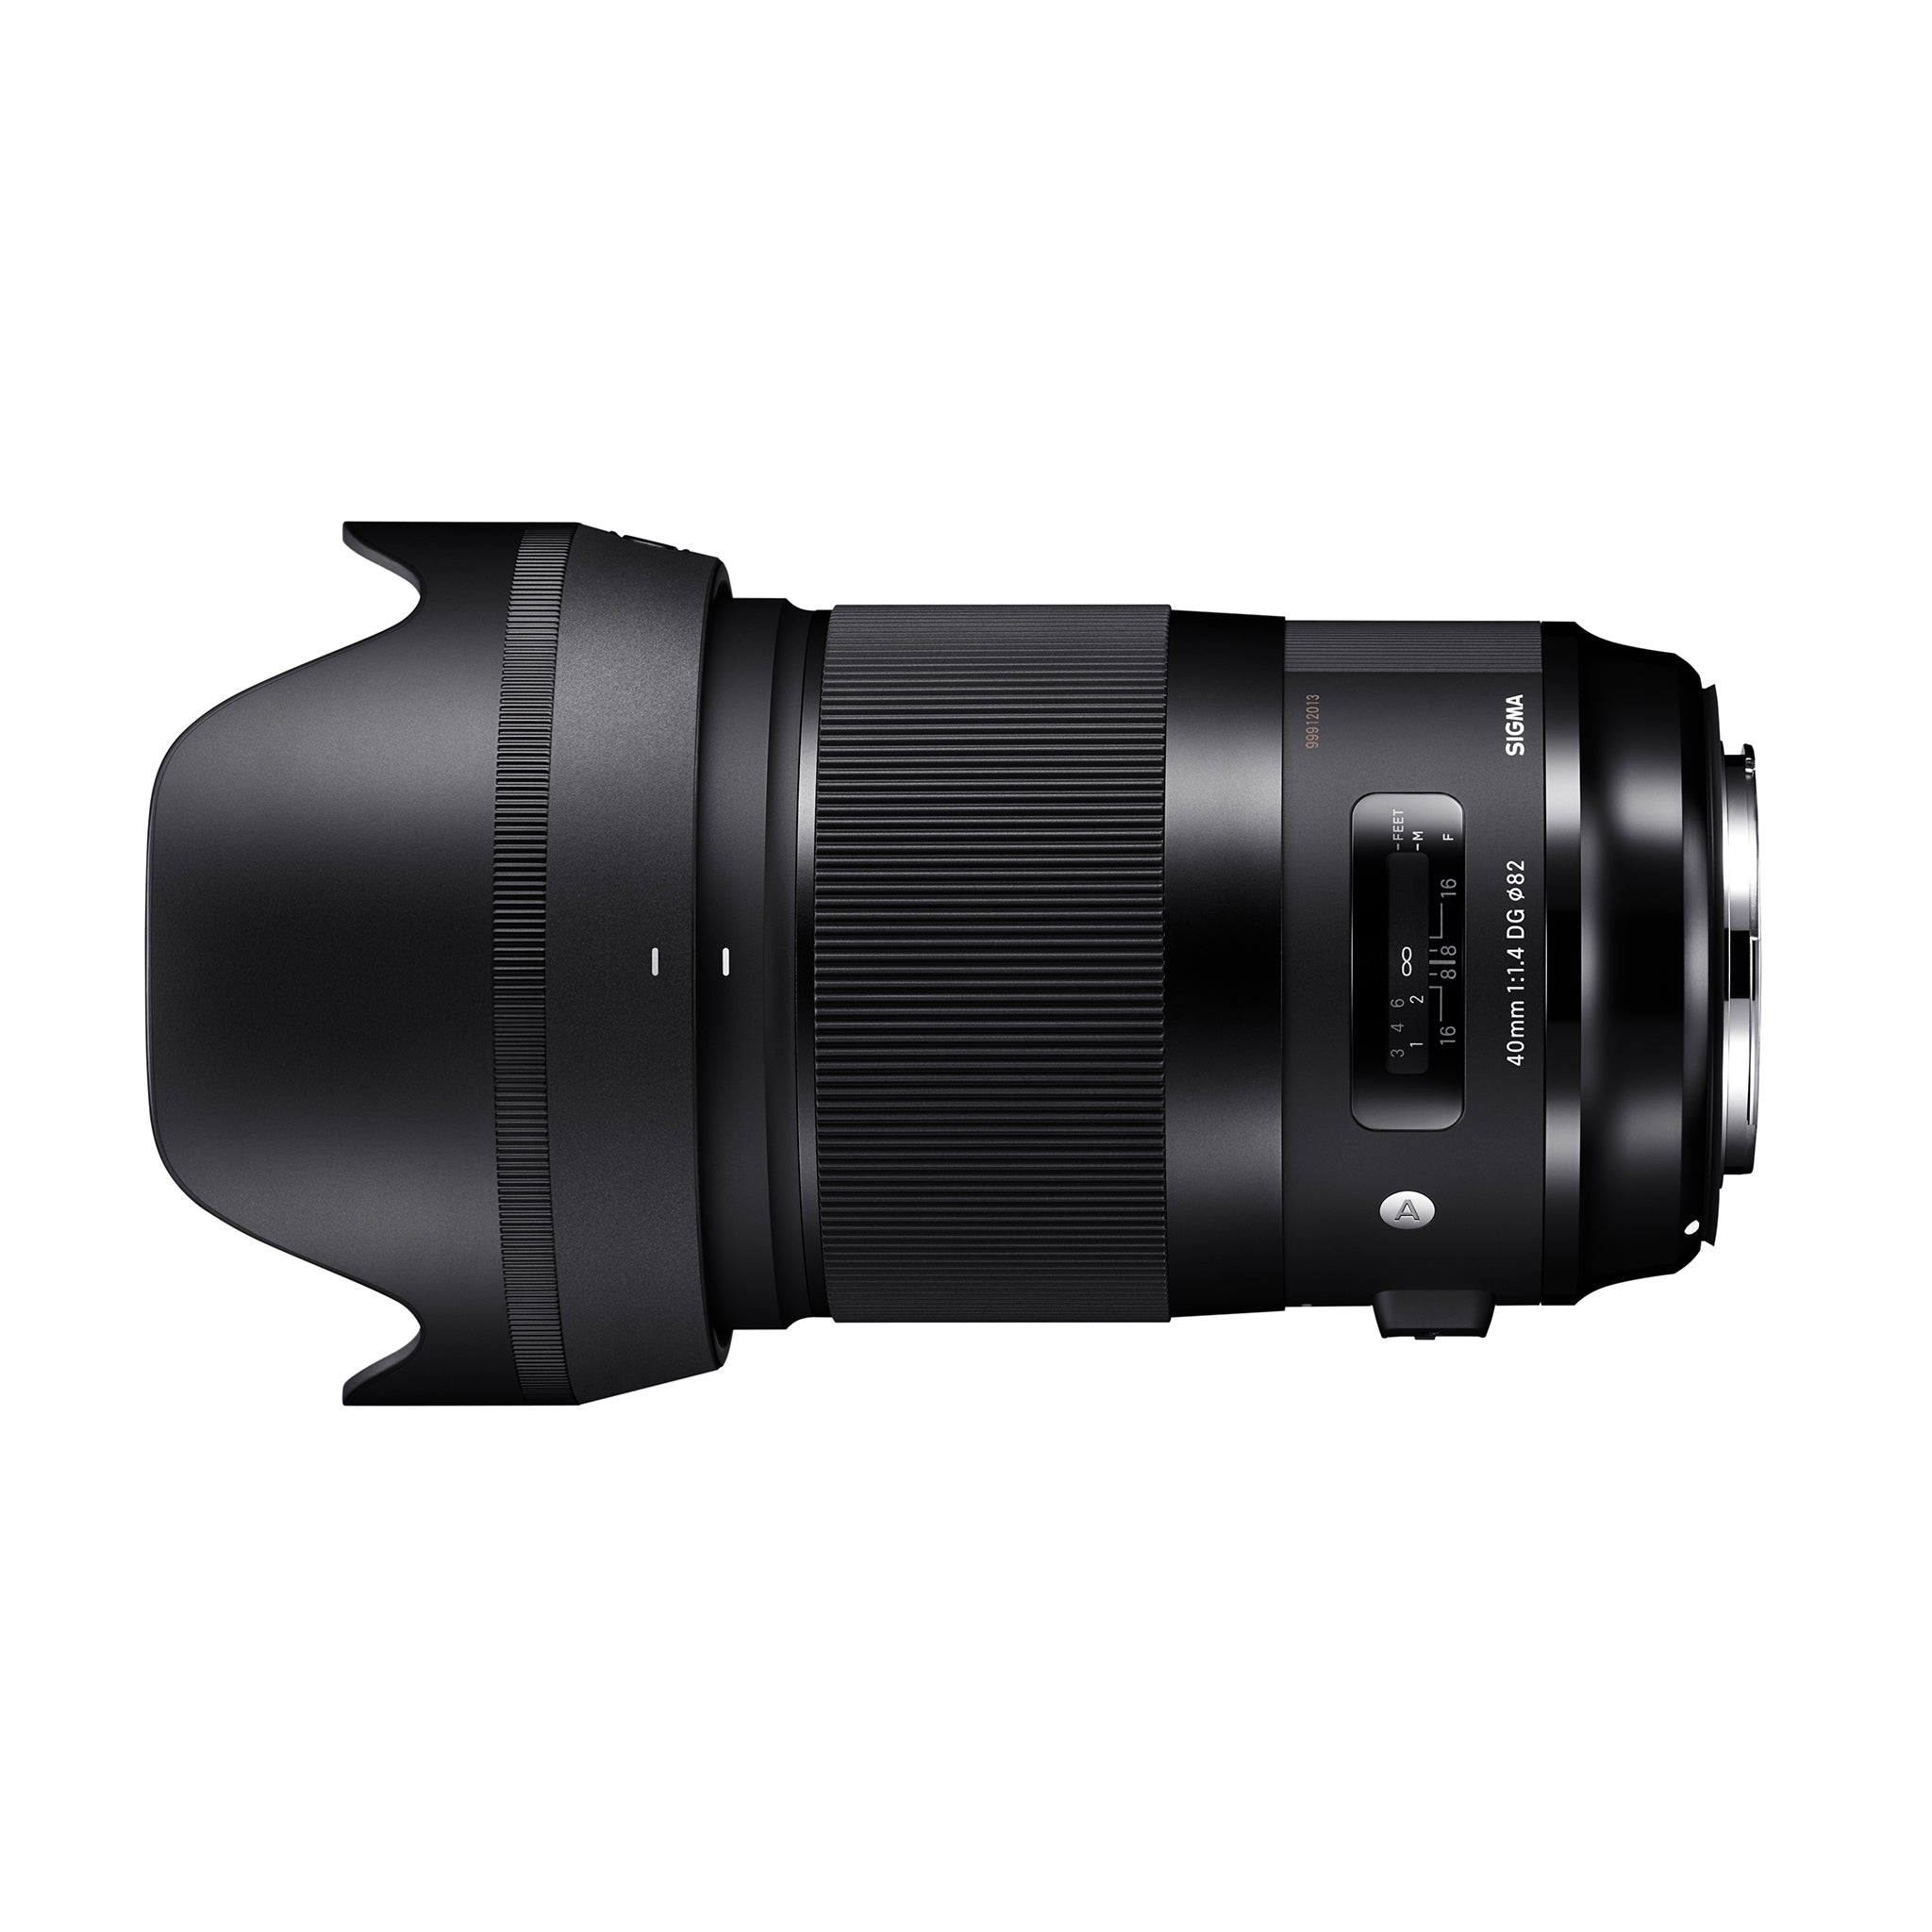 Sigma 40mm F1.4G HSM Art Lens